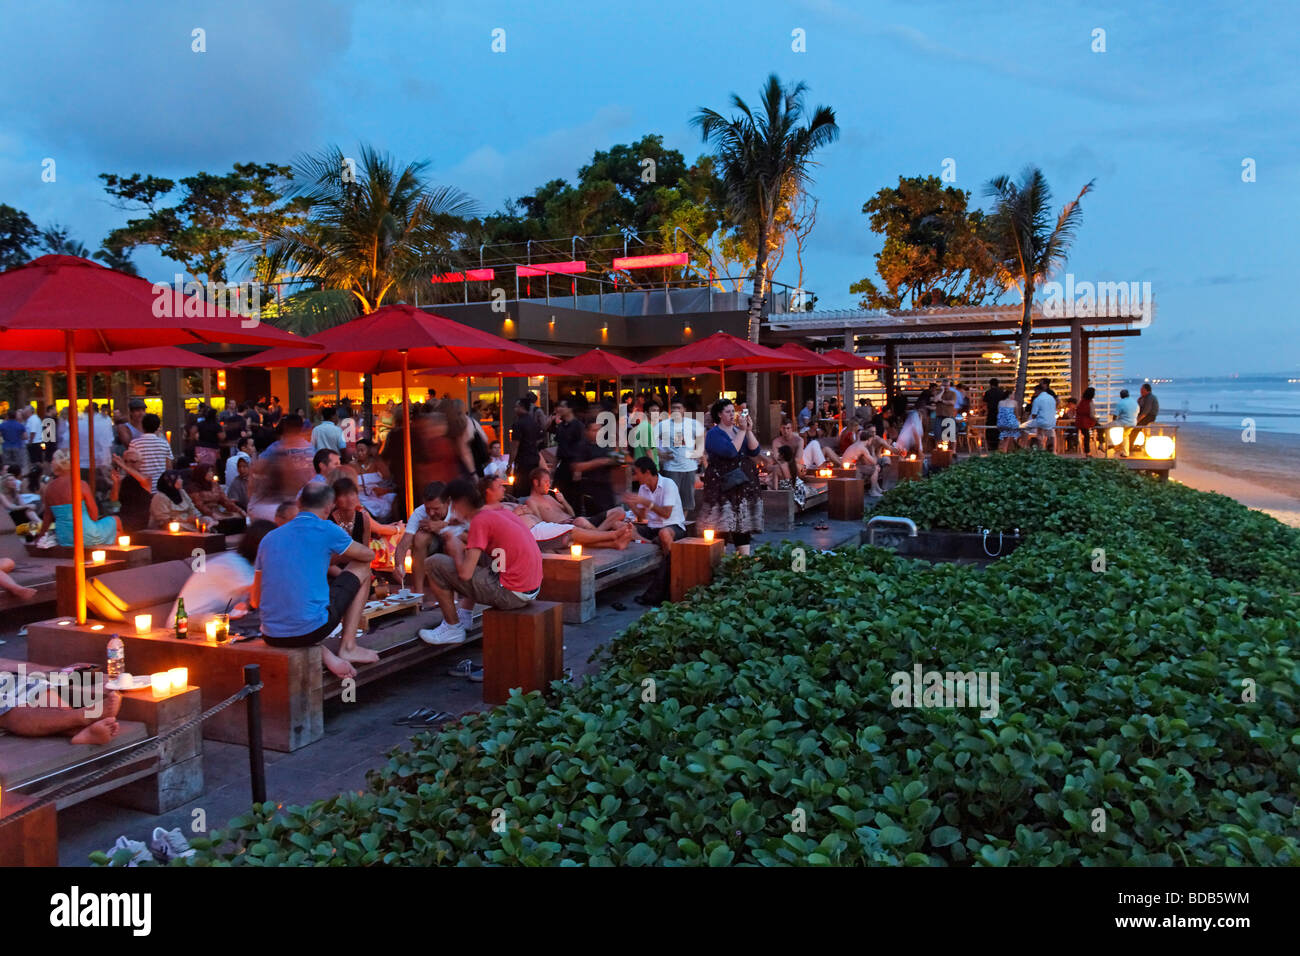 KU DE TA Lounge bar at beachfront in Seminyak Bali Indonesia Stock Photo